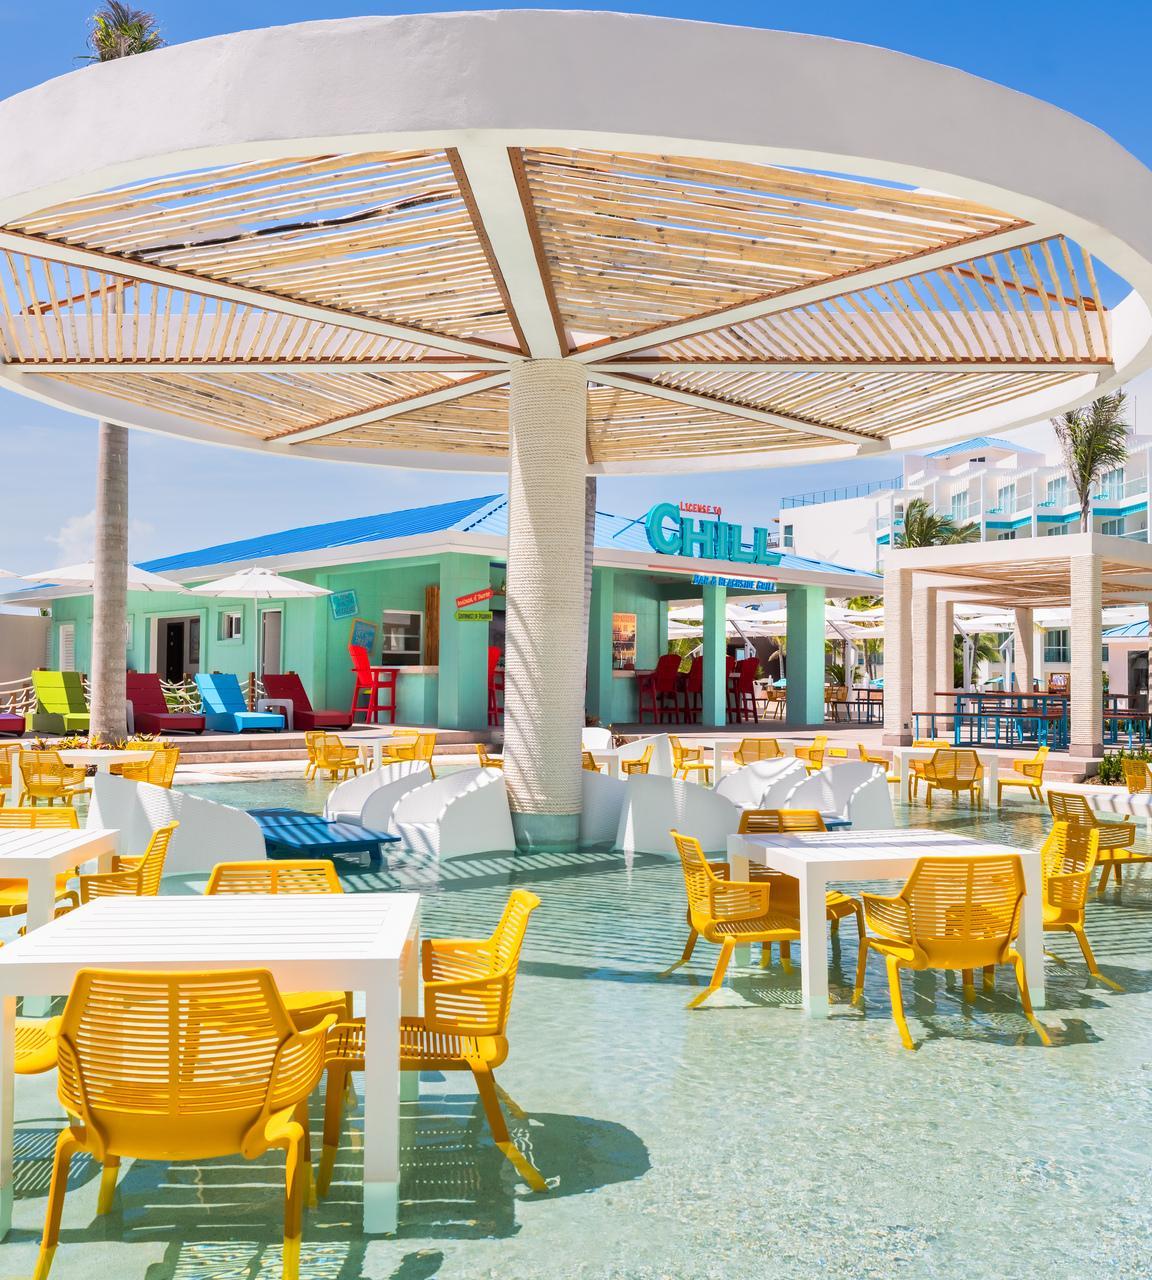 Margarita Riviera Cancun License to Chill bar, wet fee bar & beachside grill